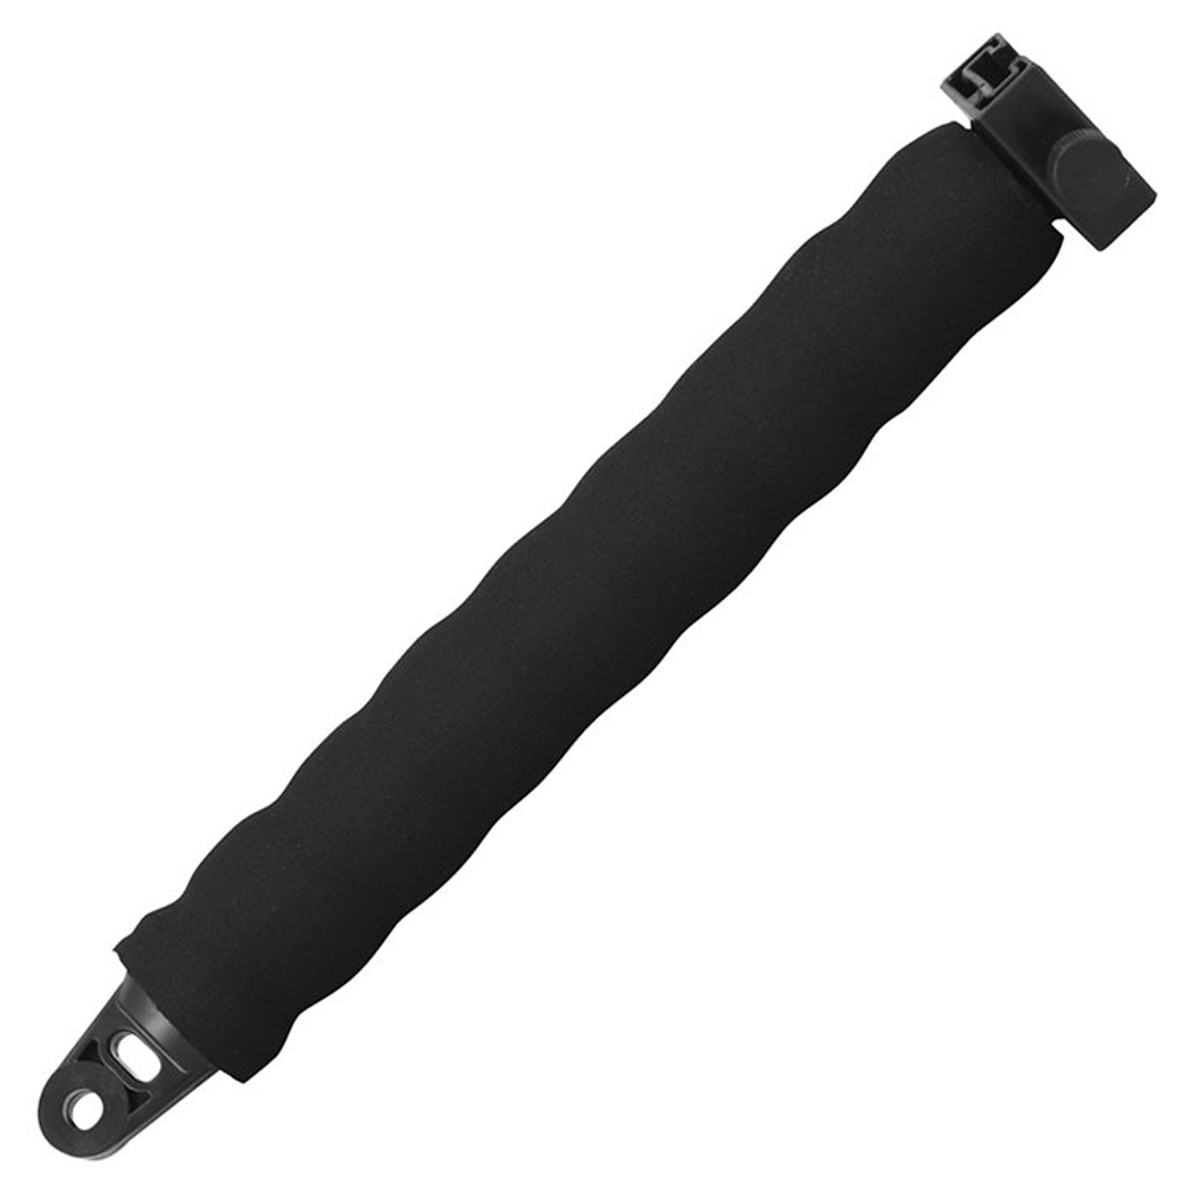 Sea &amp; Sea Compact Digital Flex Arm